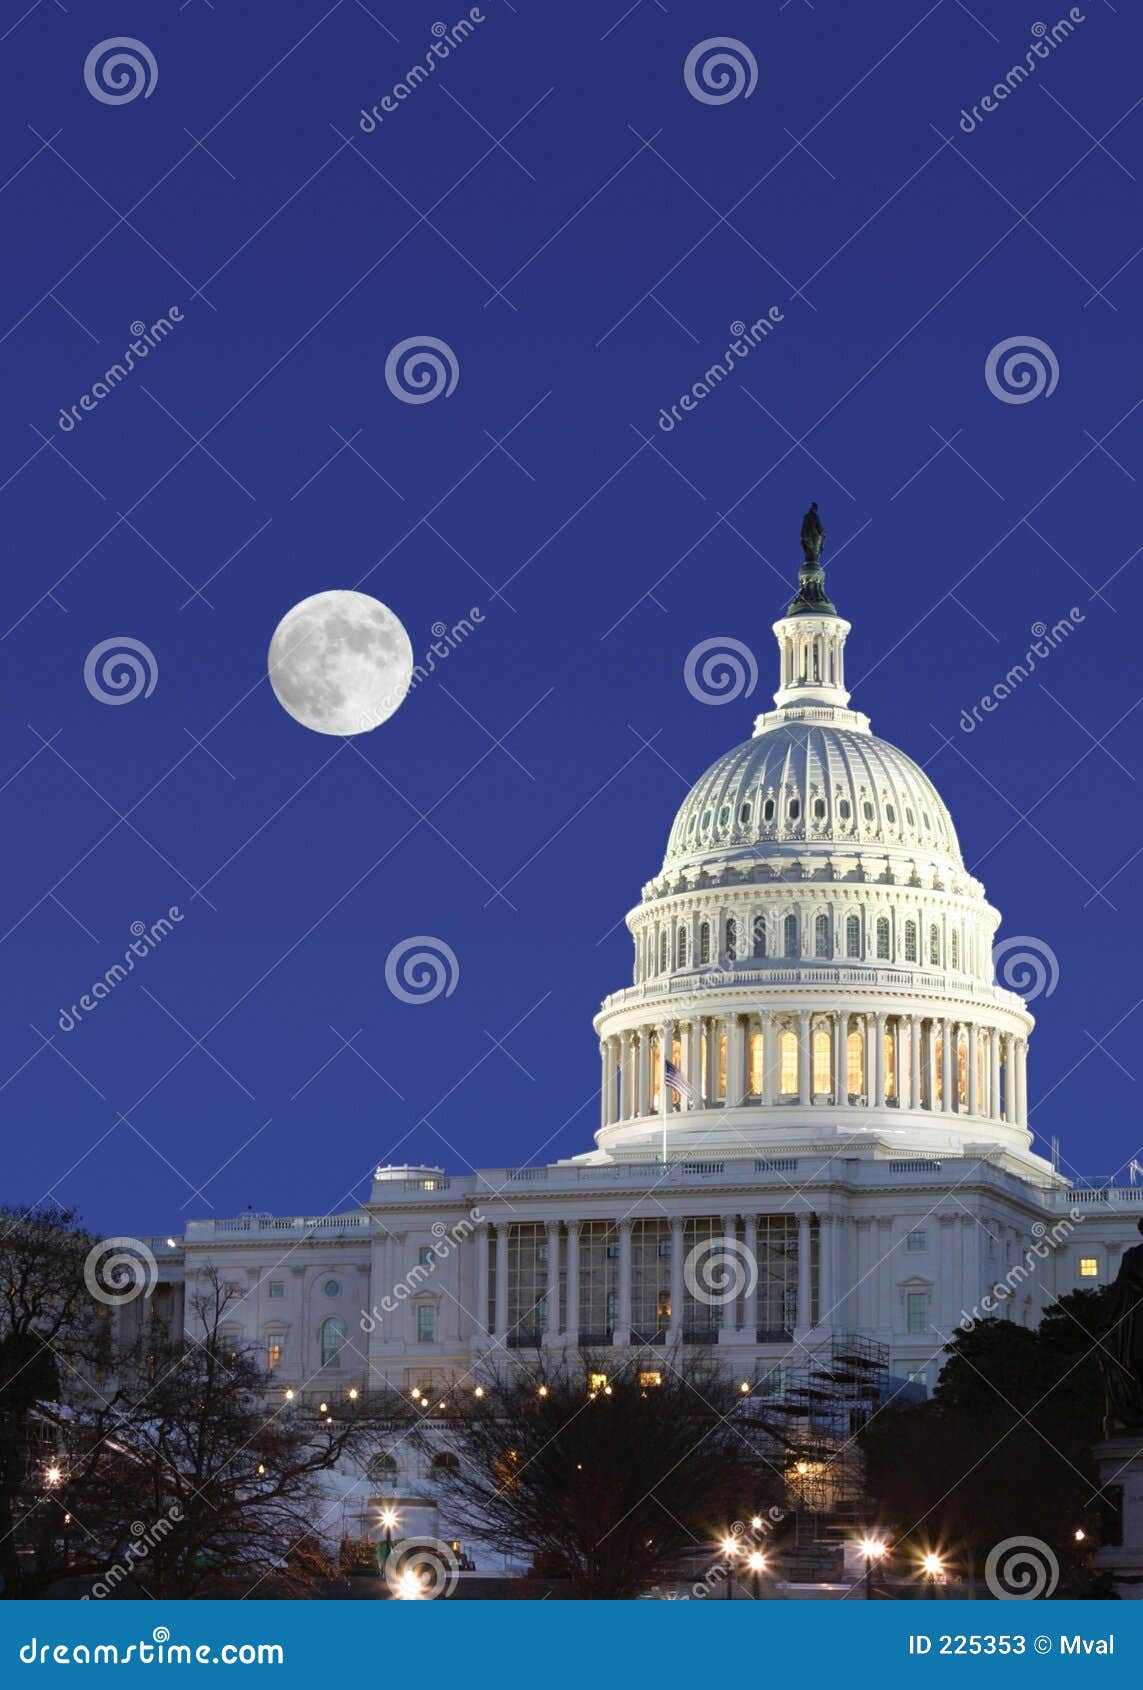 us senate and full moon